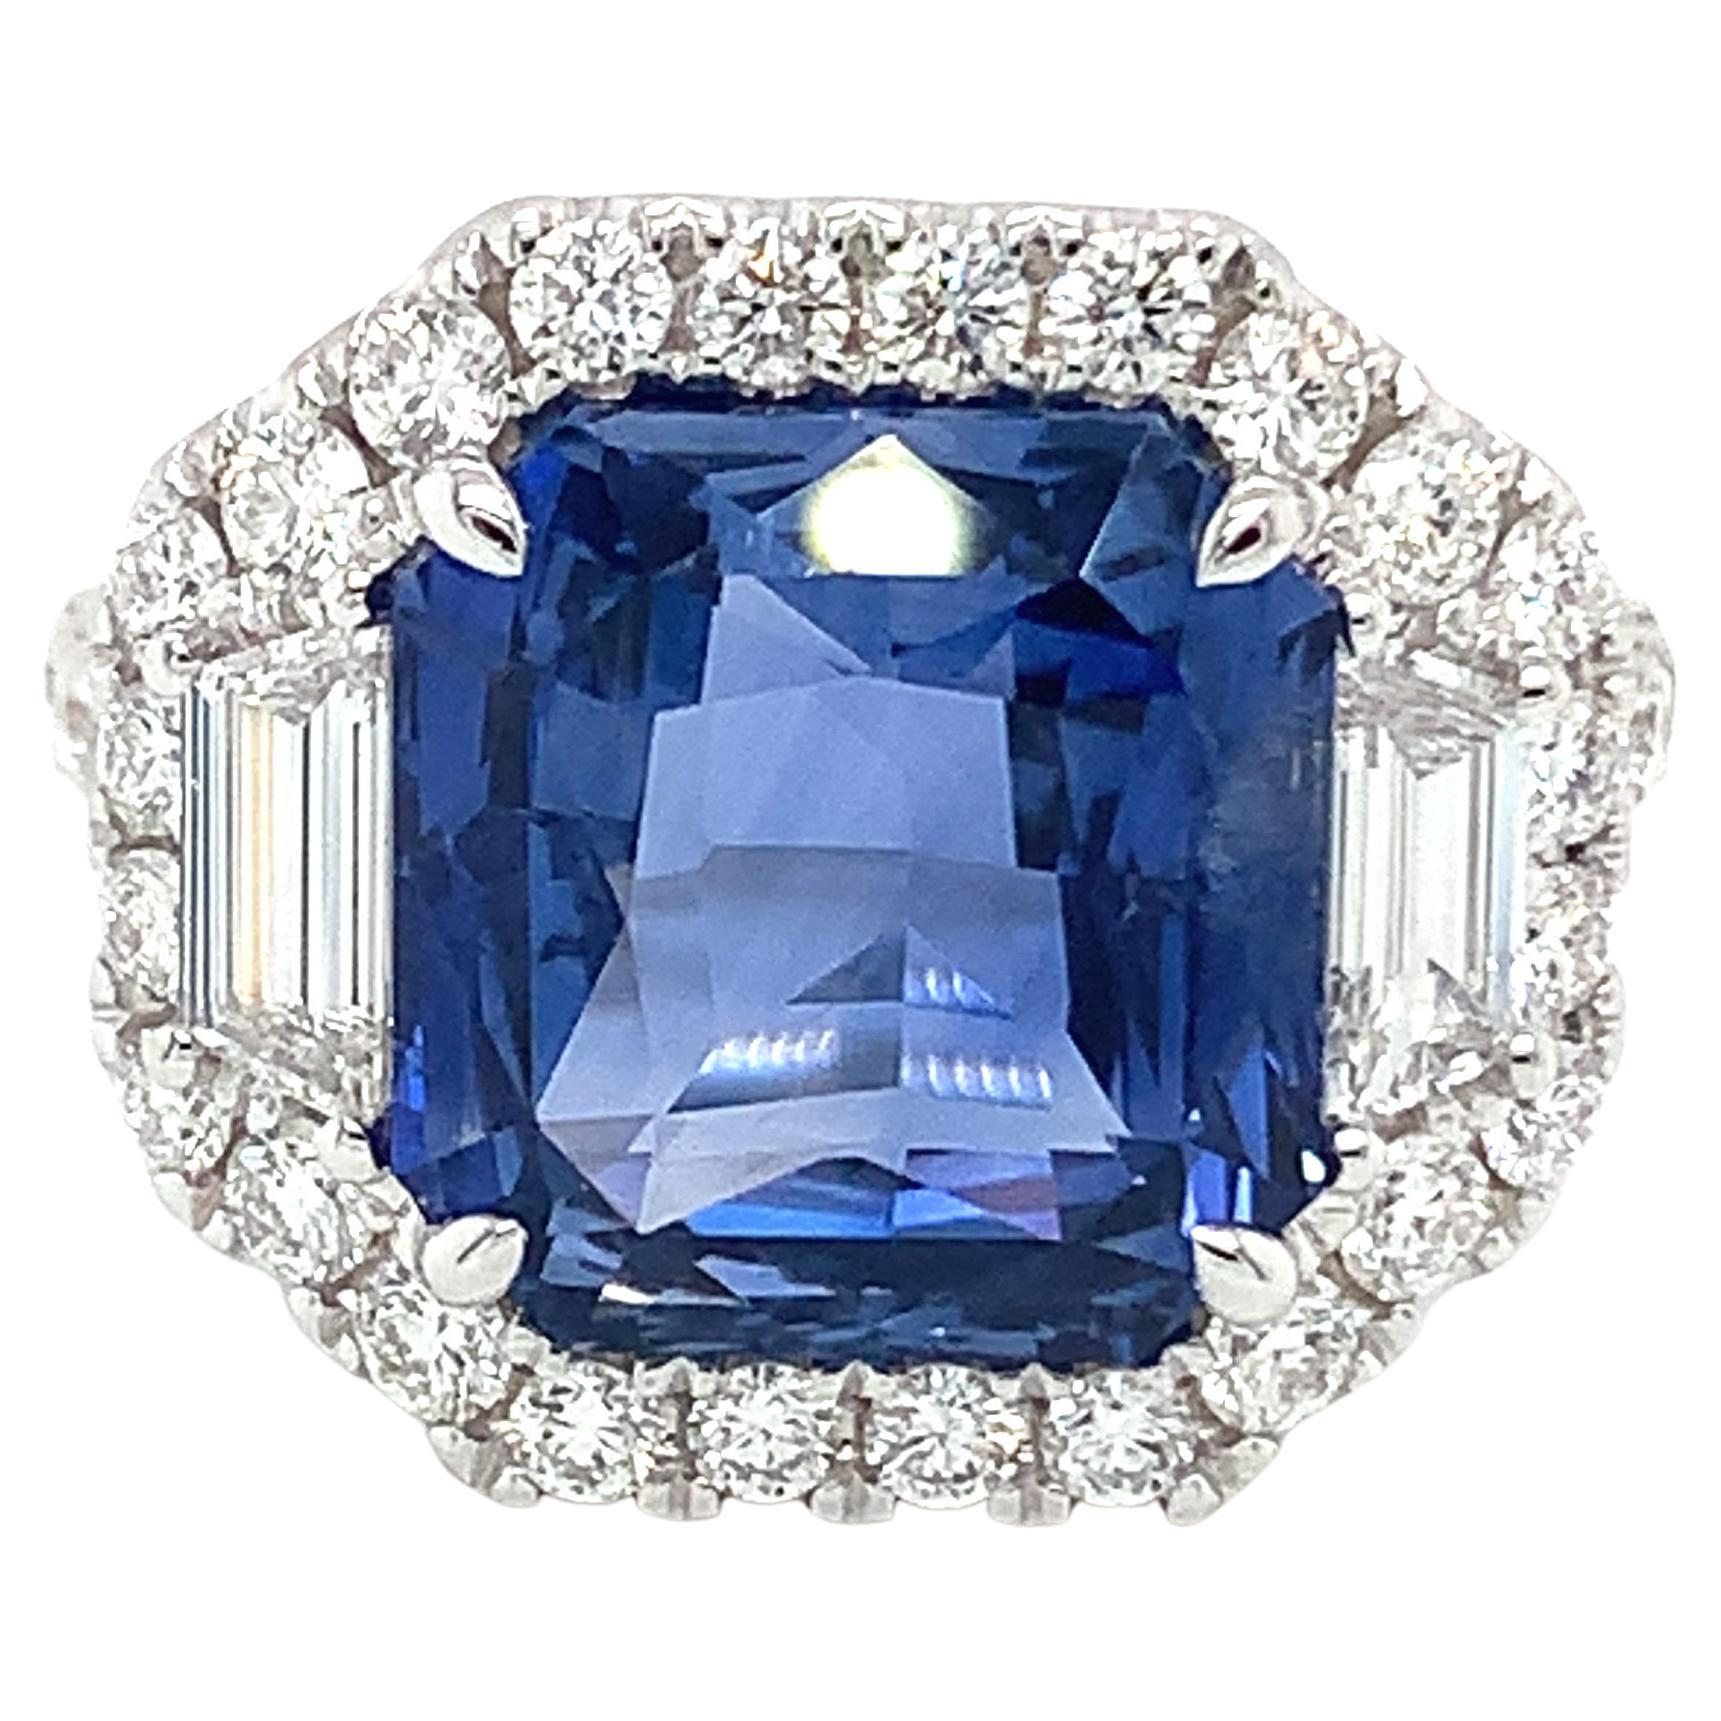 7.96 Carat Blue Sapphire & Diamond Ring in 18 Karat White Gold